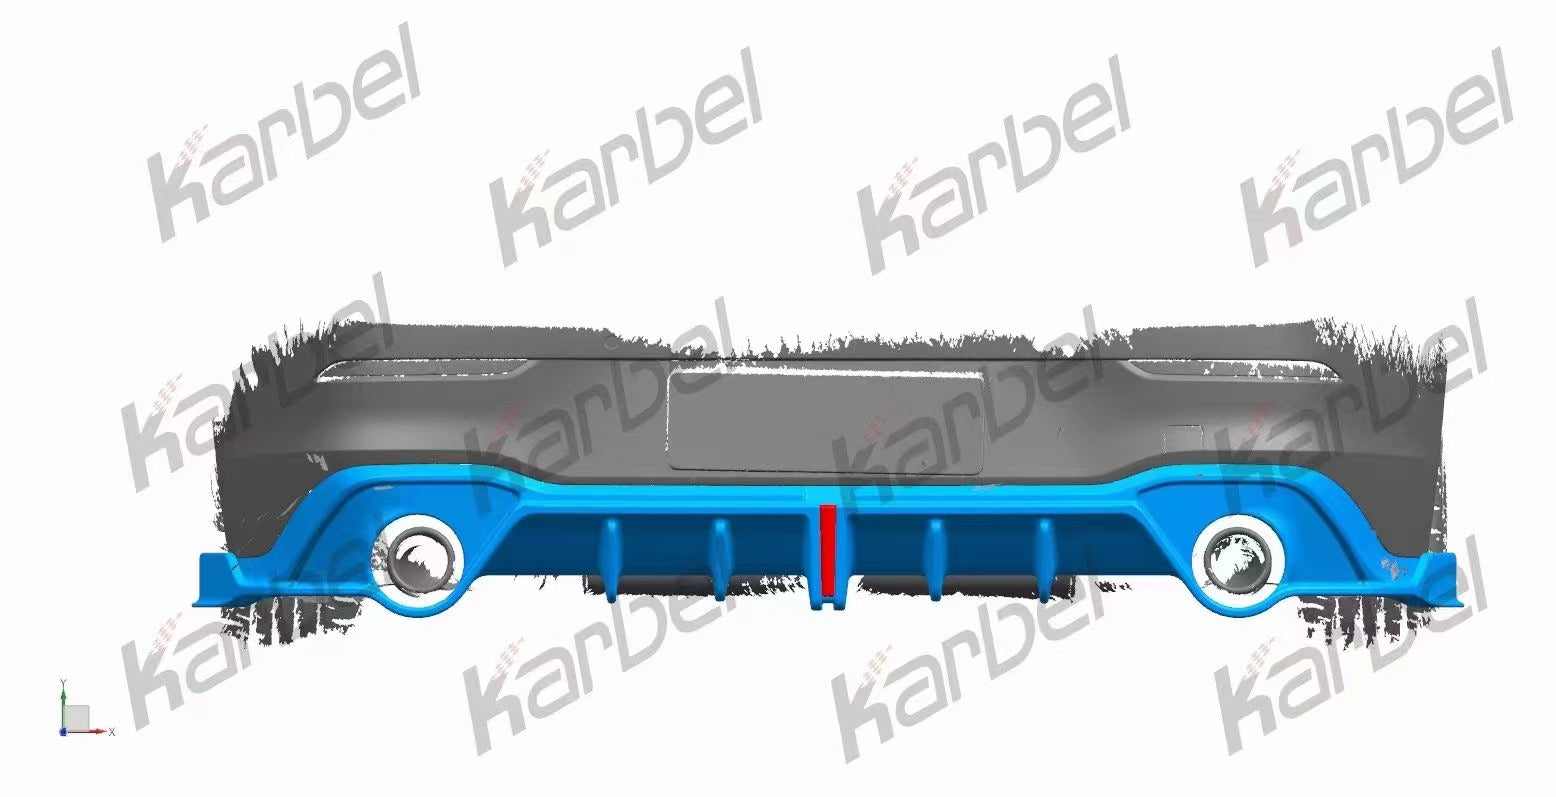 Karbel Carbon Pre-preg Carbon Fiber Full Body Kit for Volkswagen GTI MK8